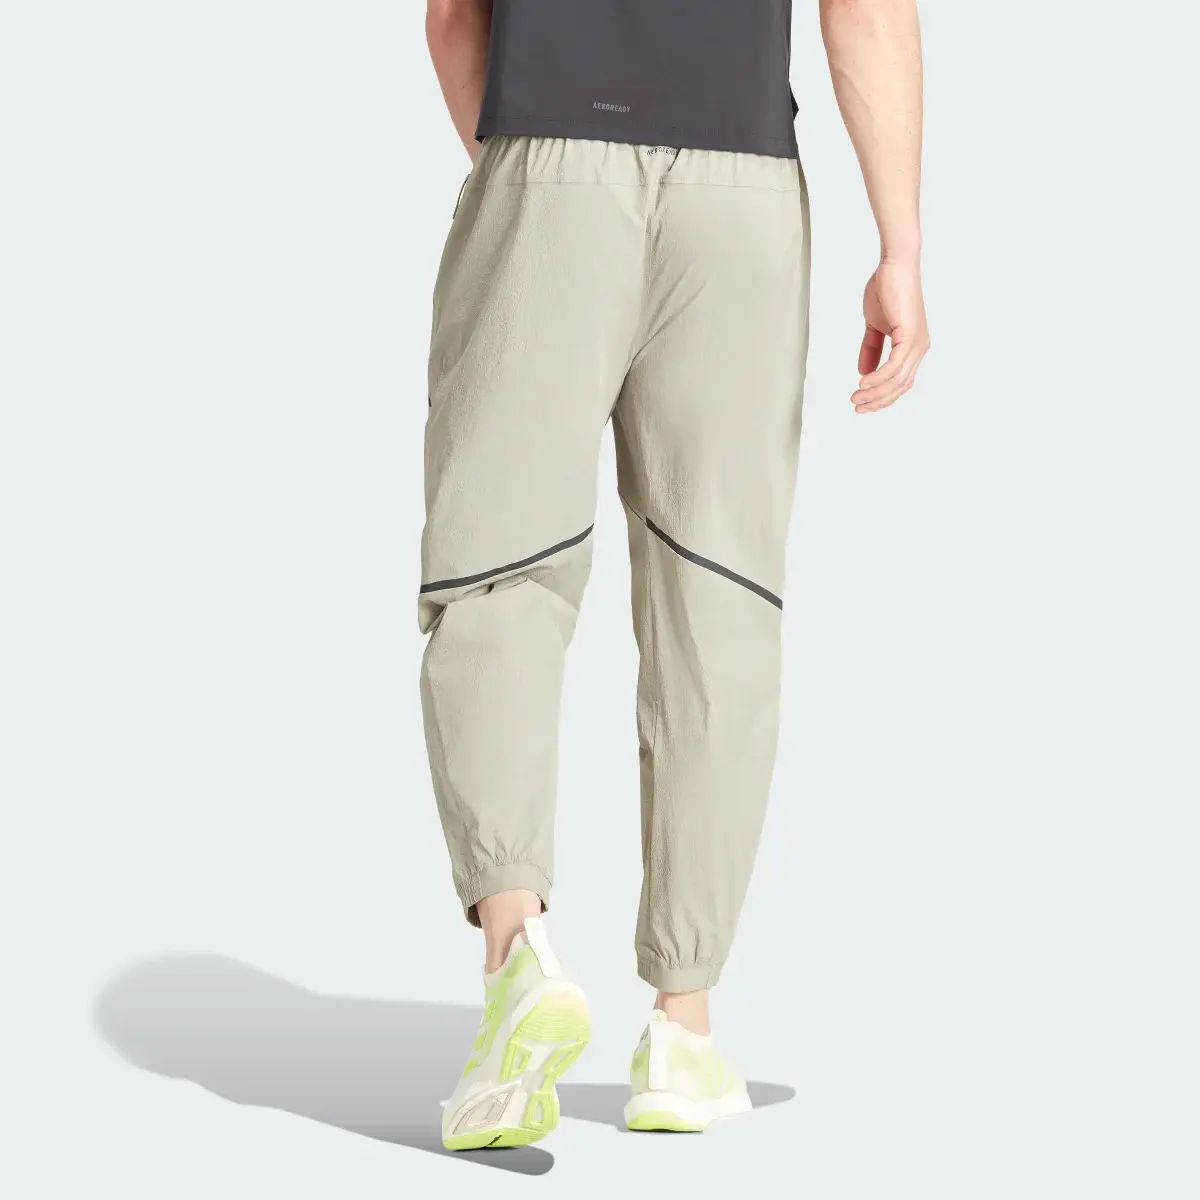 Adidas Spodnie Designed for Training Adistrong Workout. 3